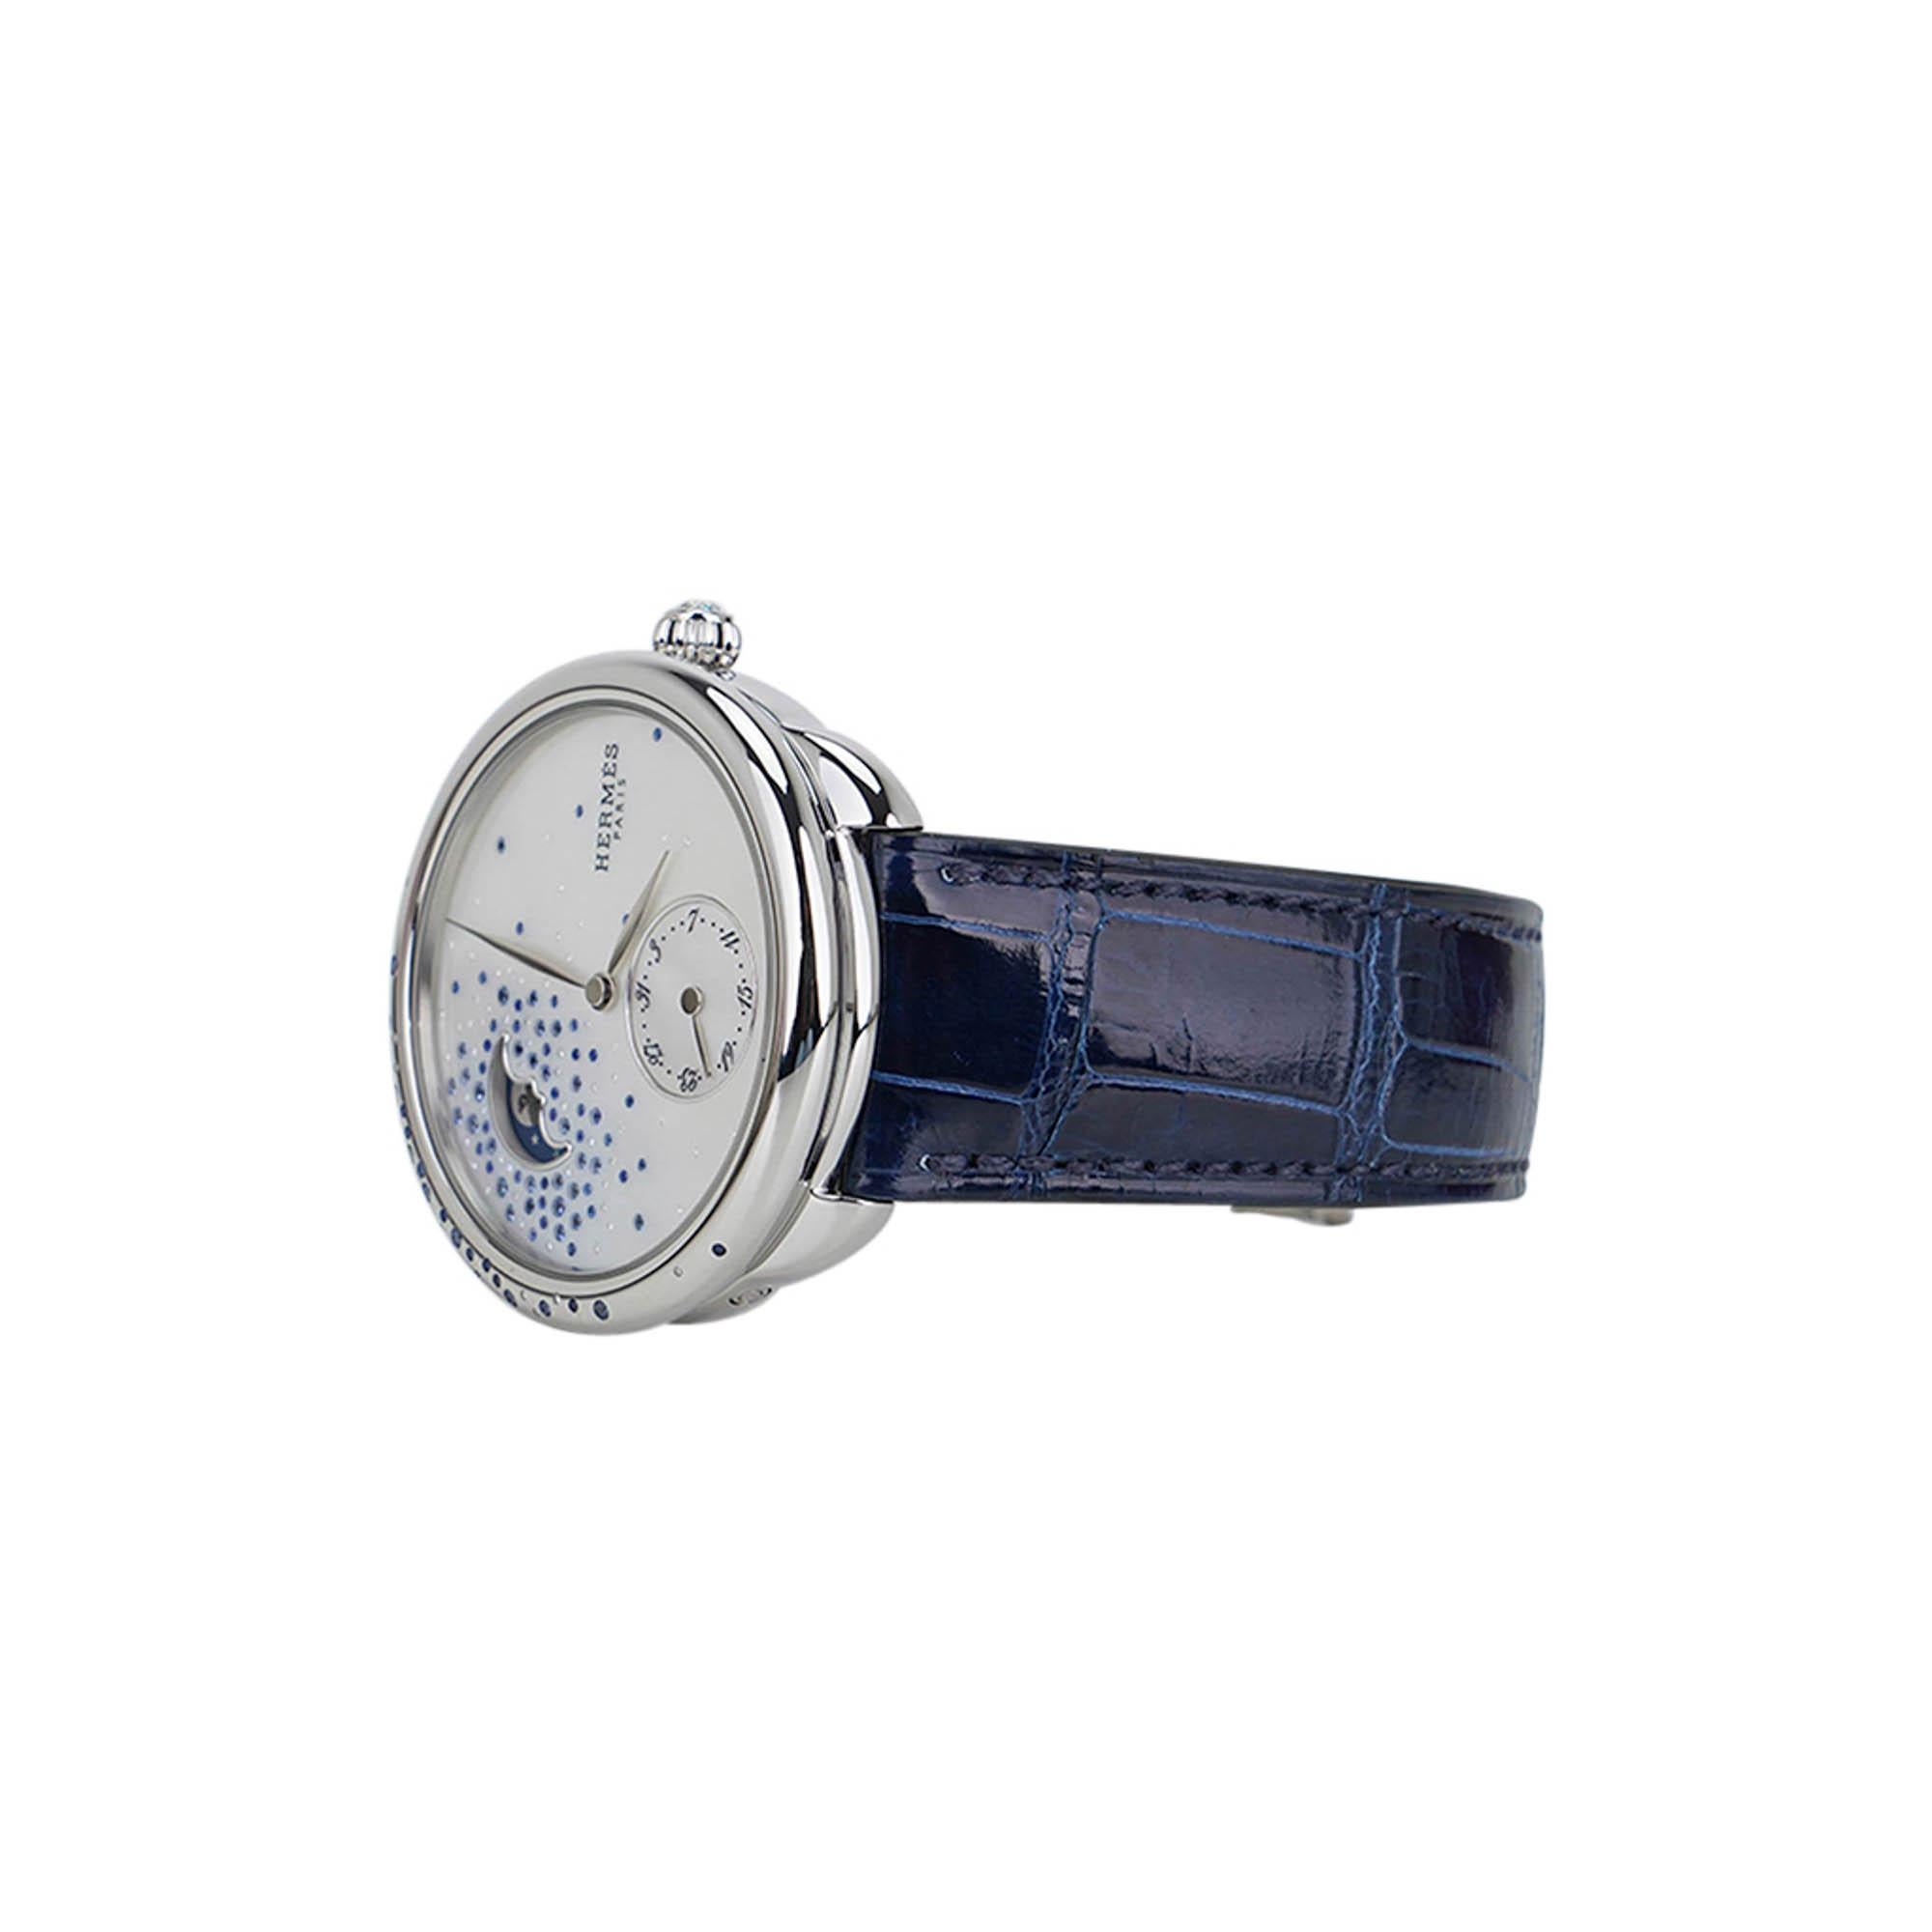 Hermes Uhr Arceau Petite Lune Großes Modell 38 mm Mondphase Saphire Diamanten im Angebot 5